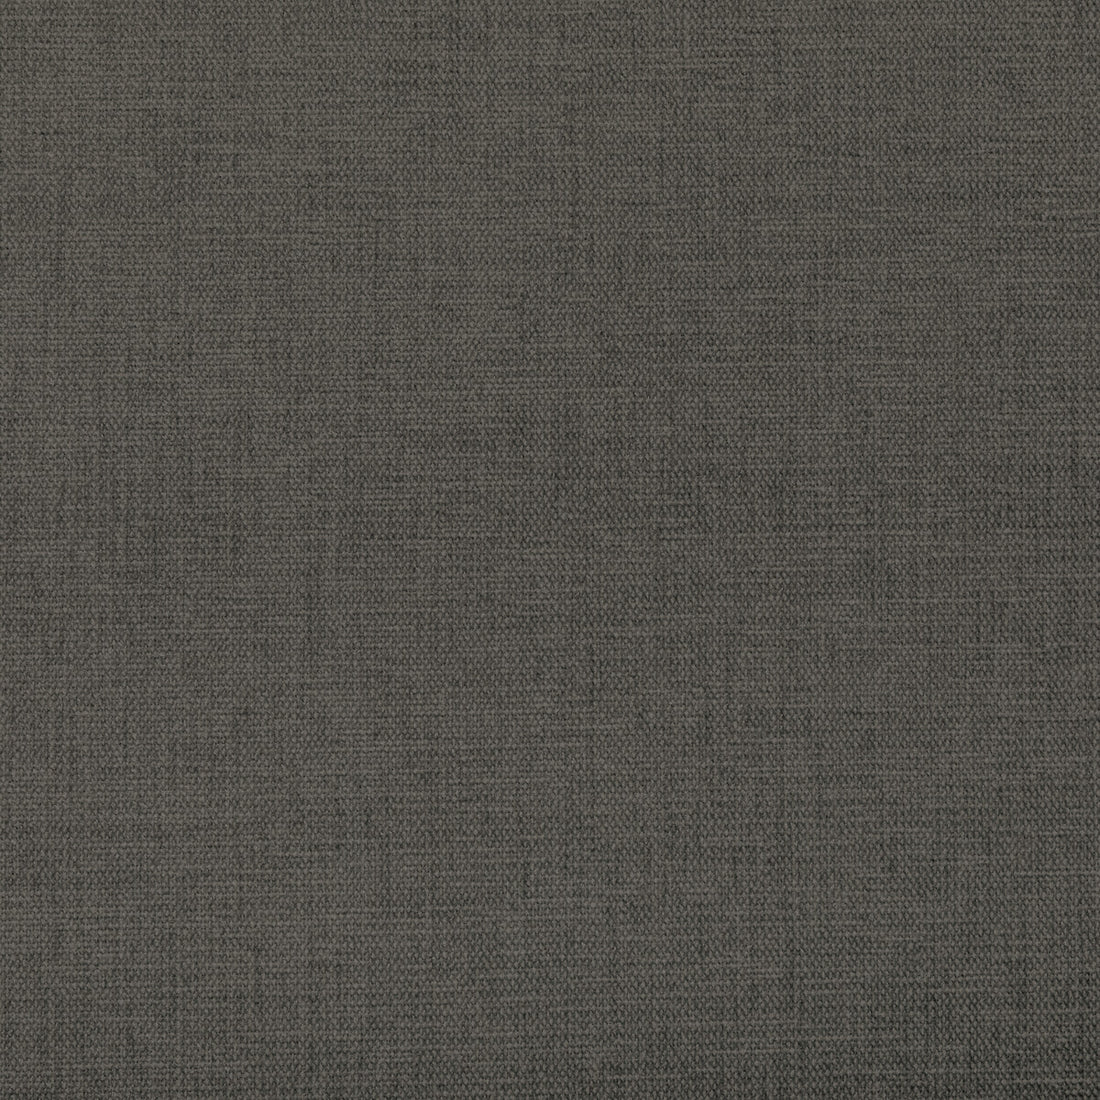 Kravet Smart fabric in 34959-1521 color - pattern 34959.1521.0 - by Kravet Smart in the Performance Kravetarmor collection